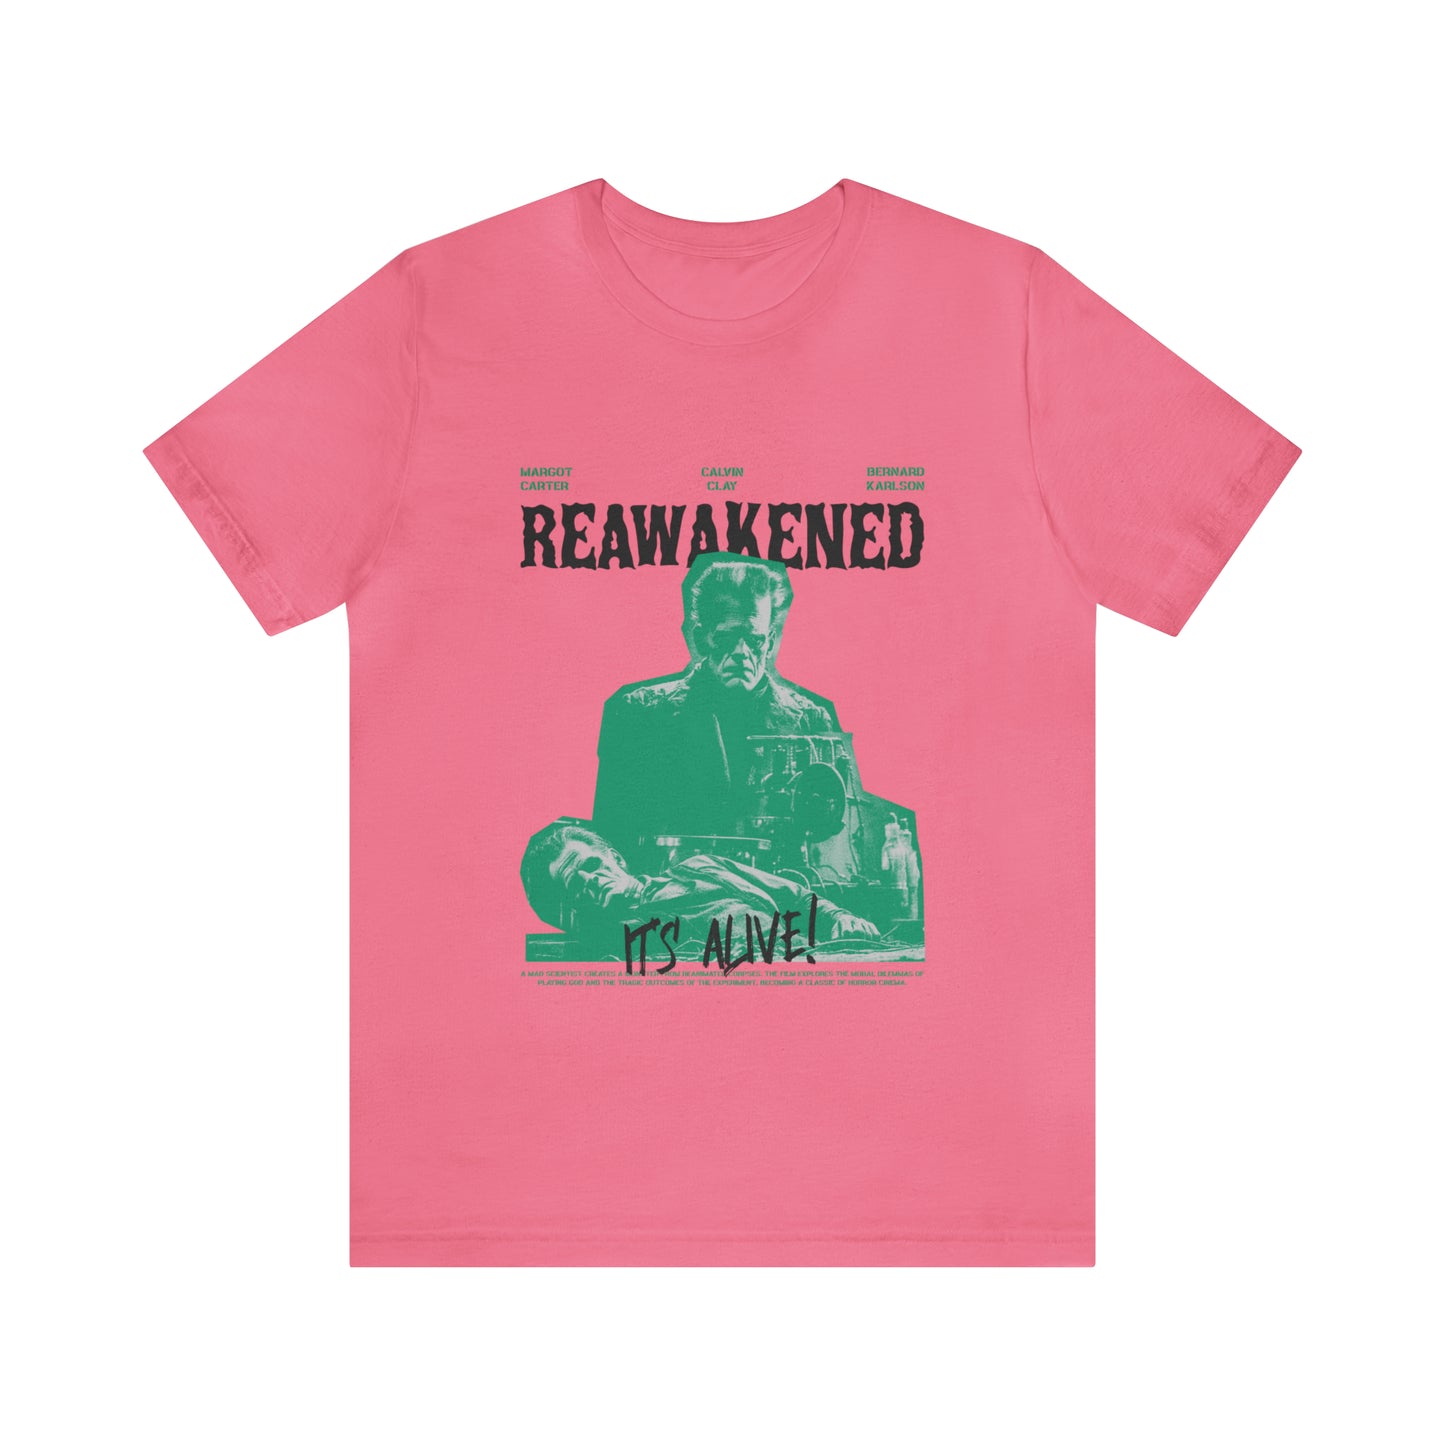 Reawakened - Unisex T-Shirt